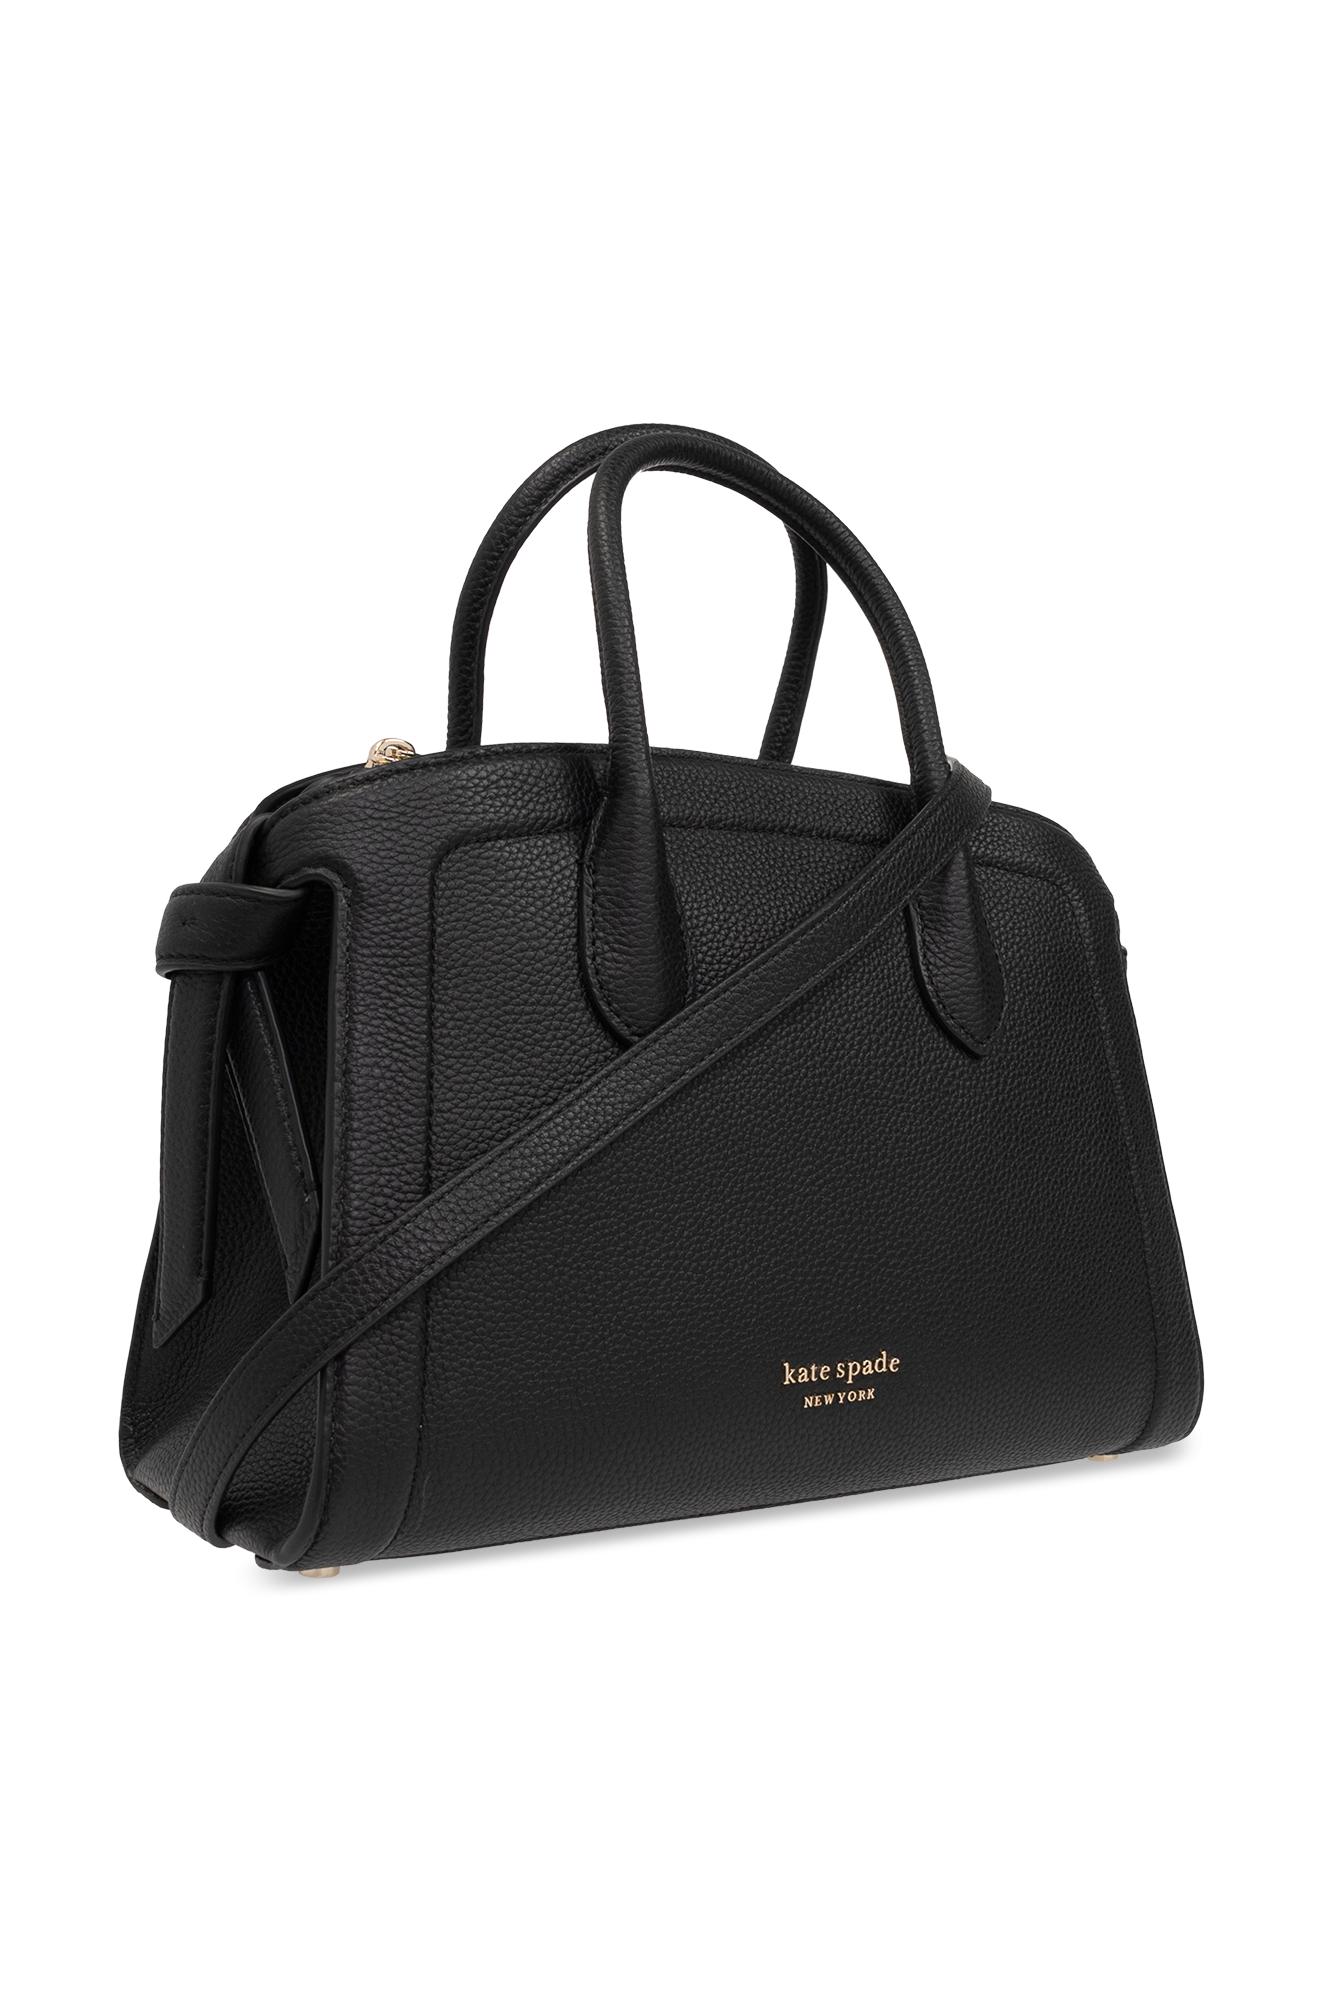 Knott medium black leather handbag with detachable shoulder strap